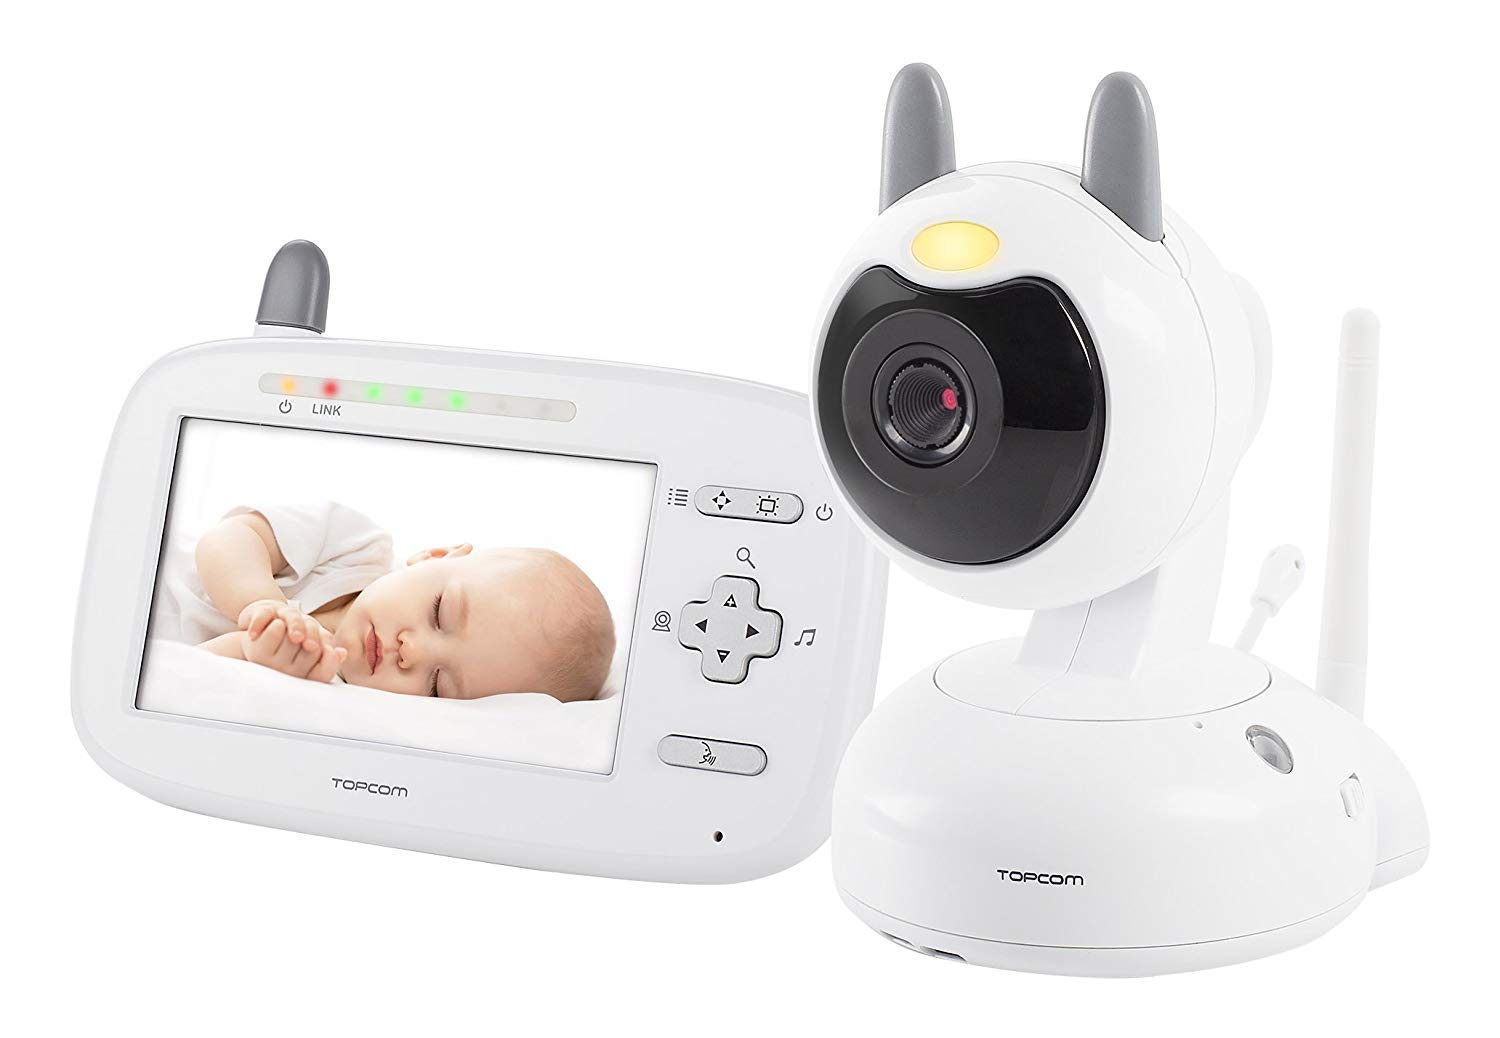 Topcom KS-4249 Digital Baby Video Monitor - 4.3 Inch Colour Display - Movable Camera